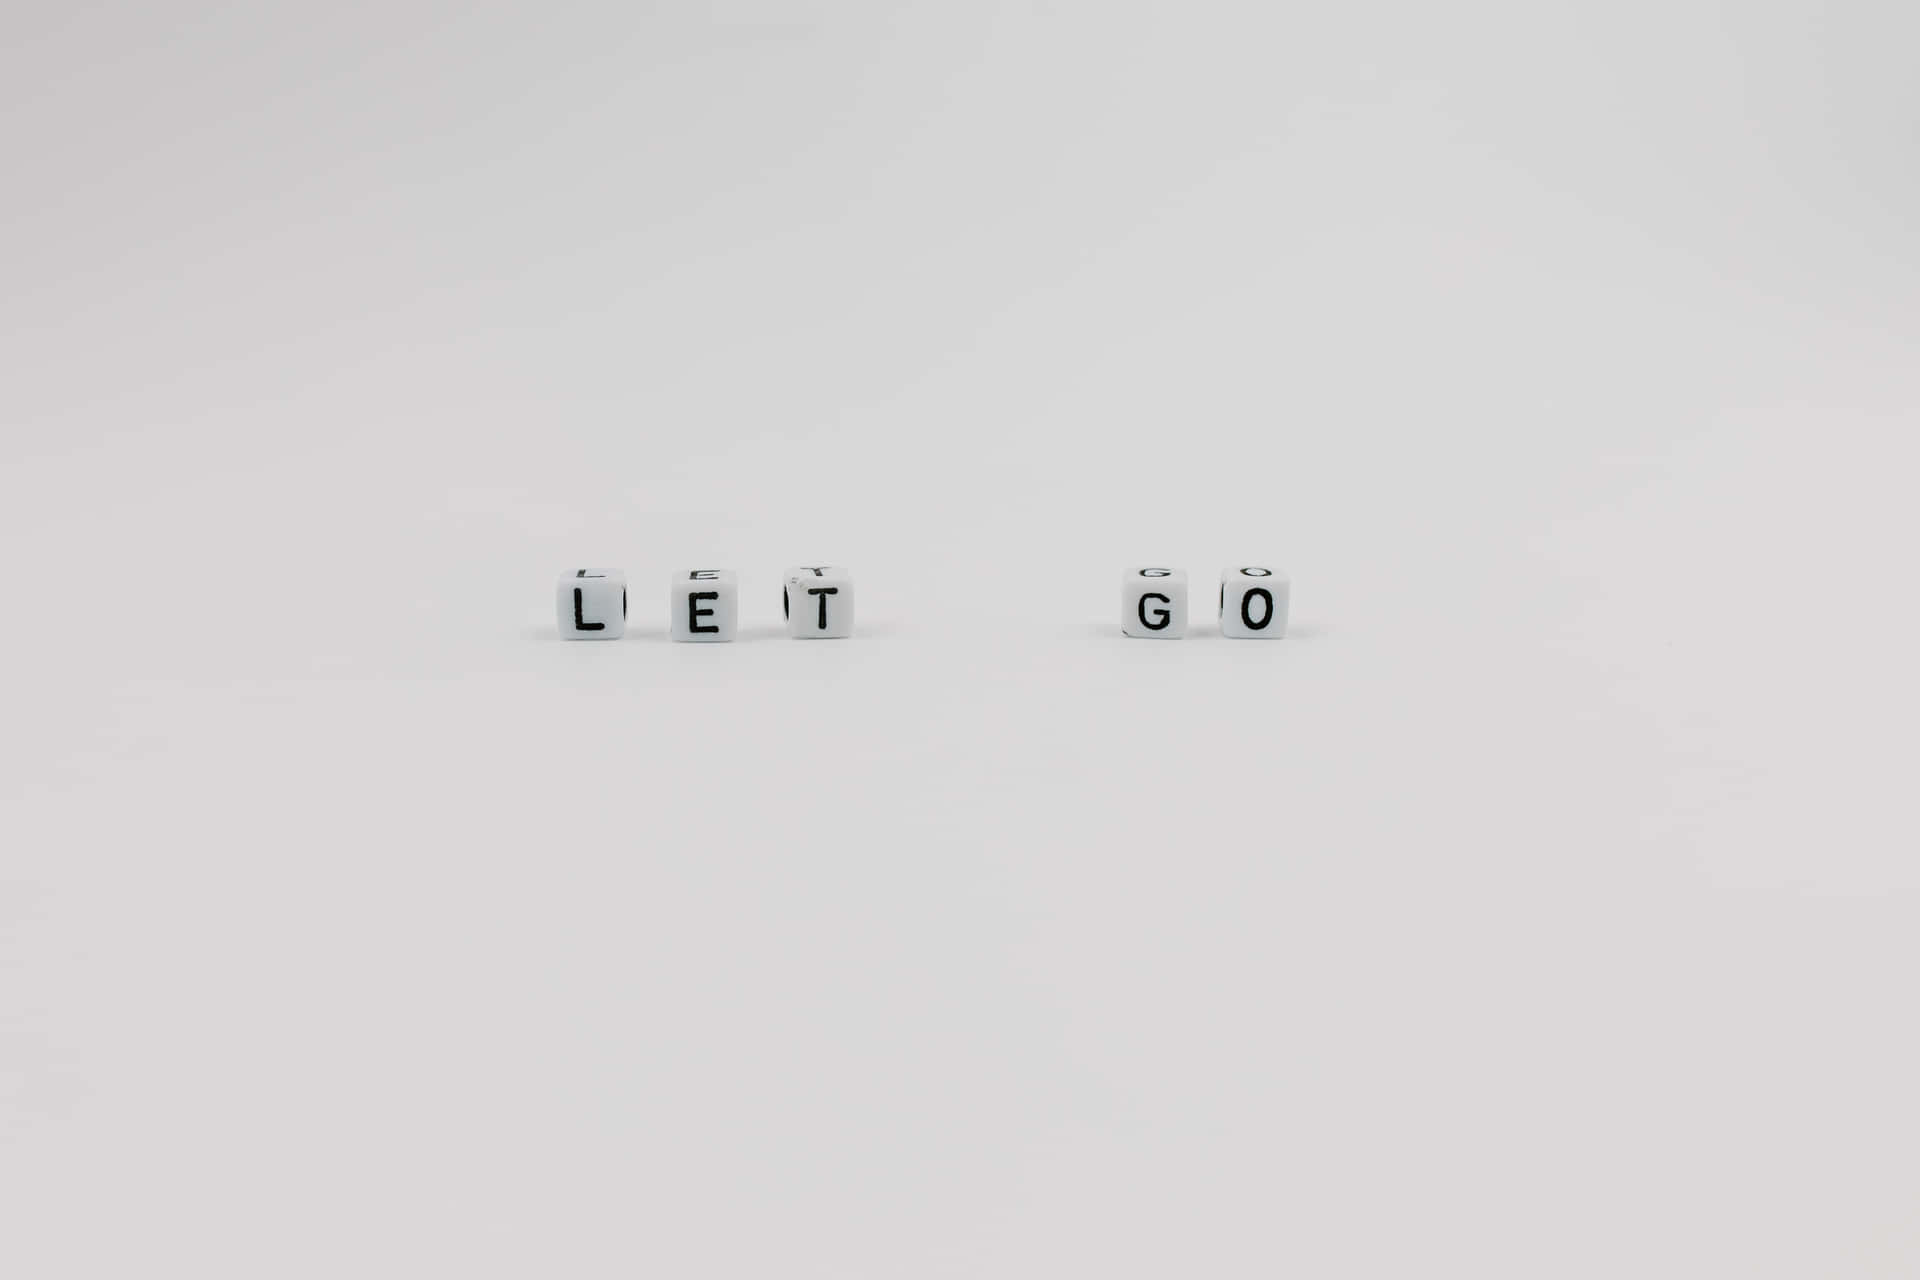 Inspirational Let it Go Blocks Message Wallpaper